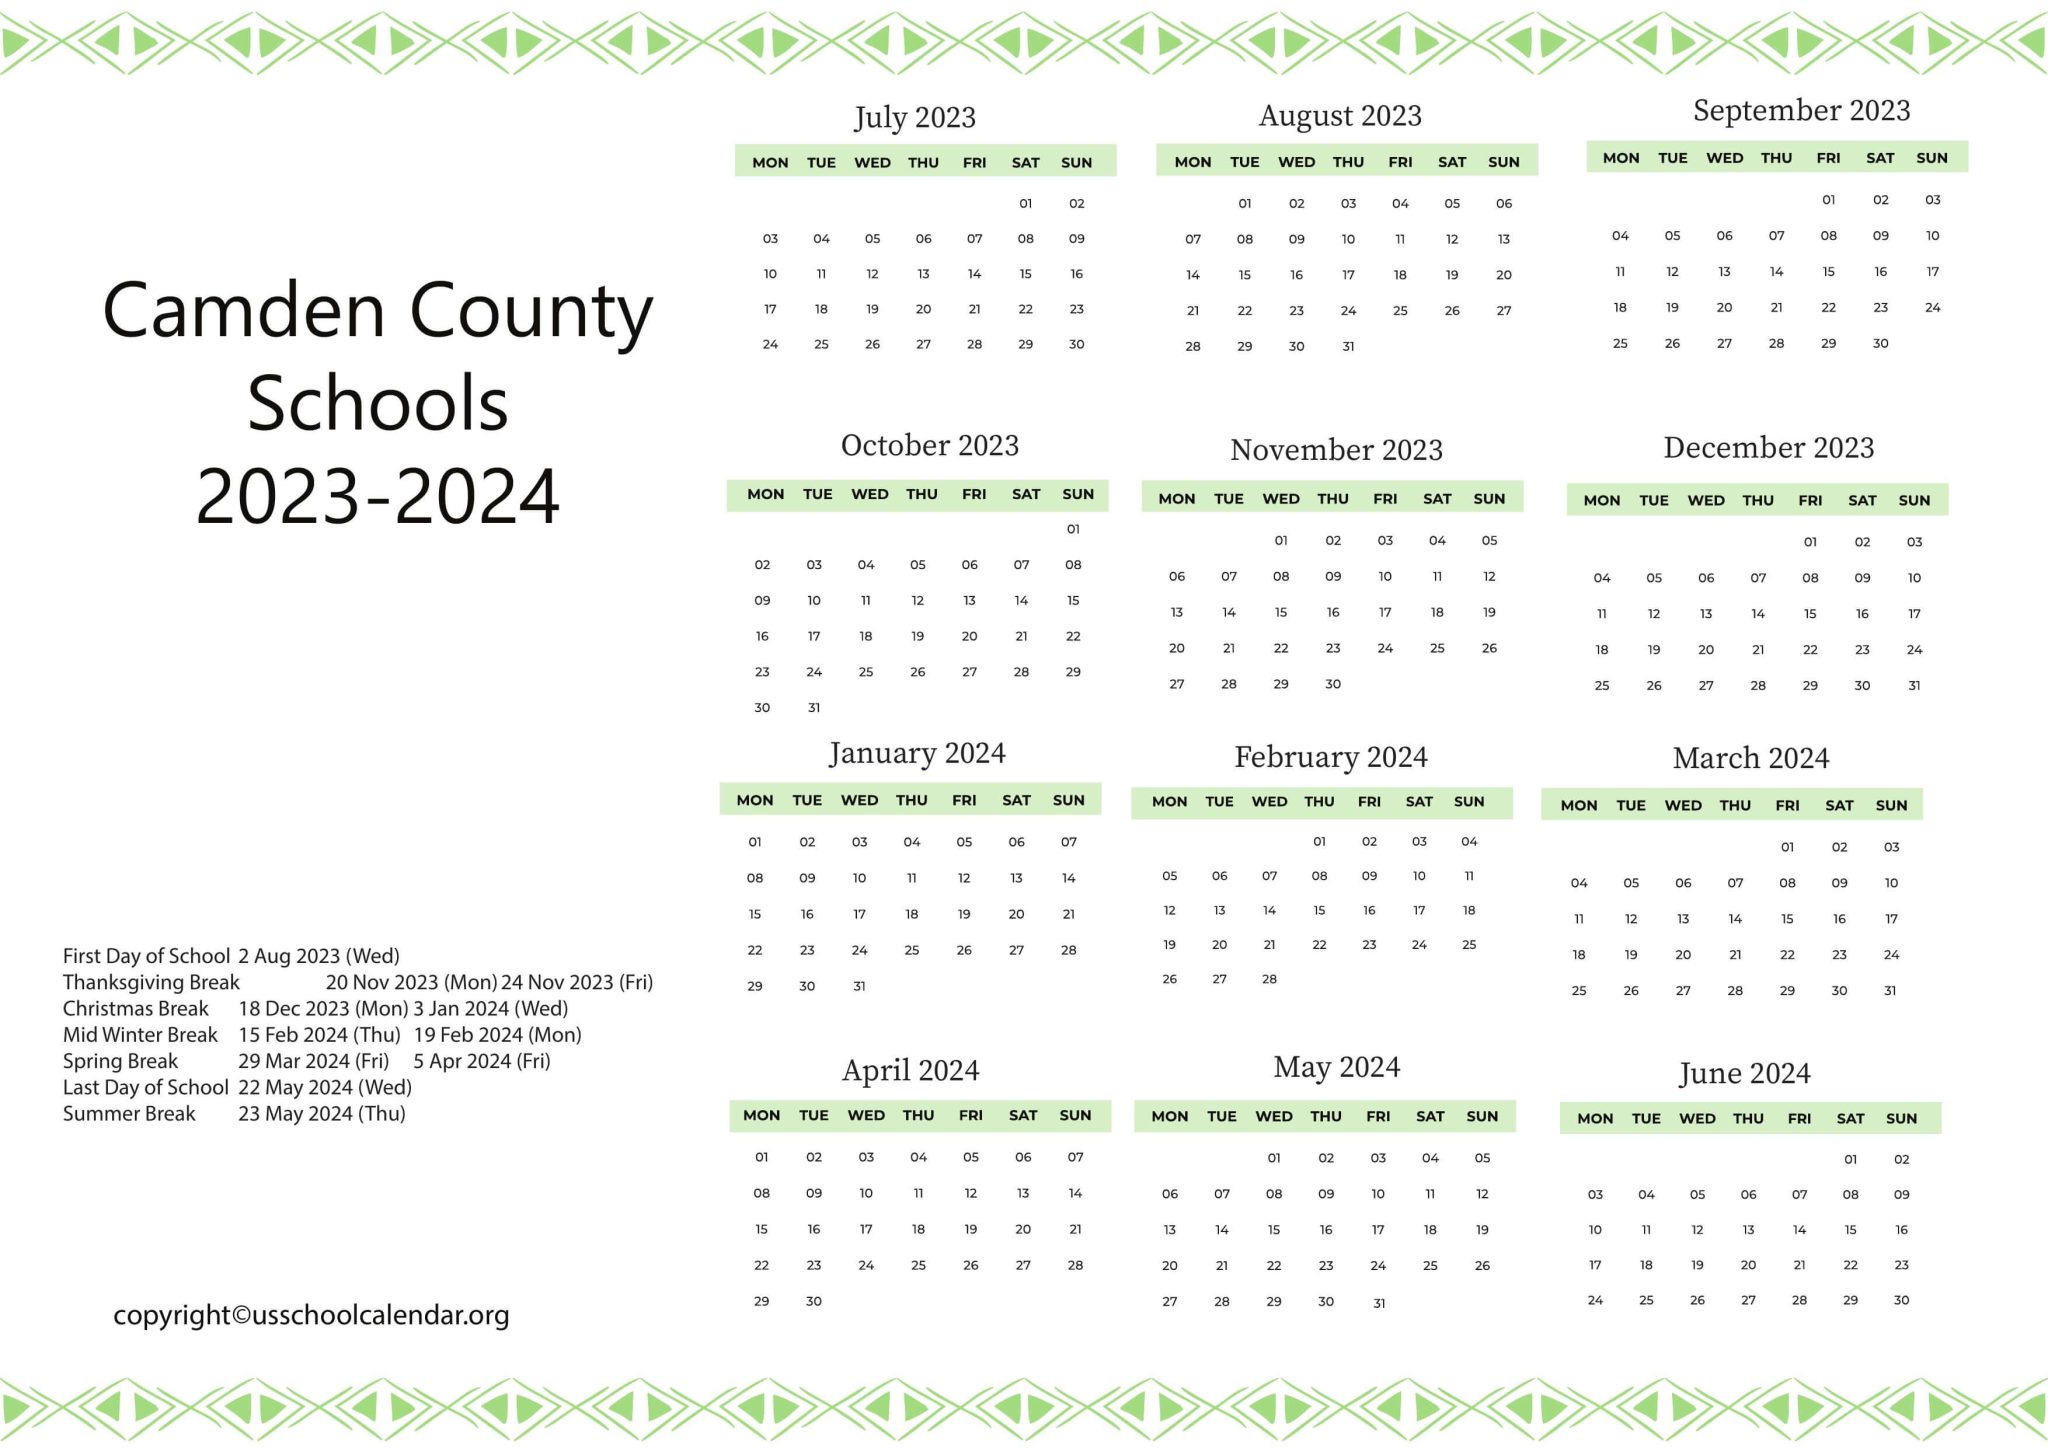 camden-county-schools-calendar-with-holidays-2023-2024